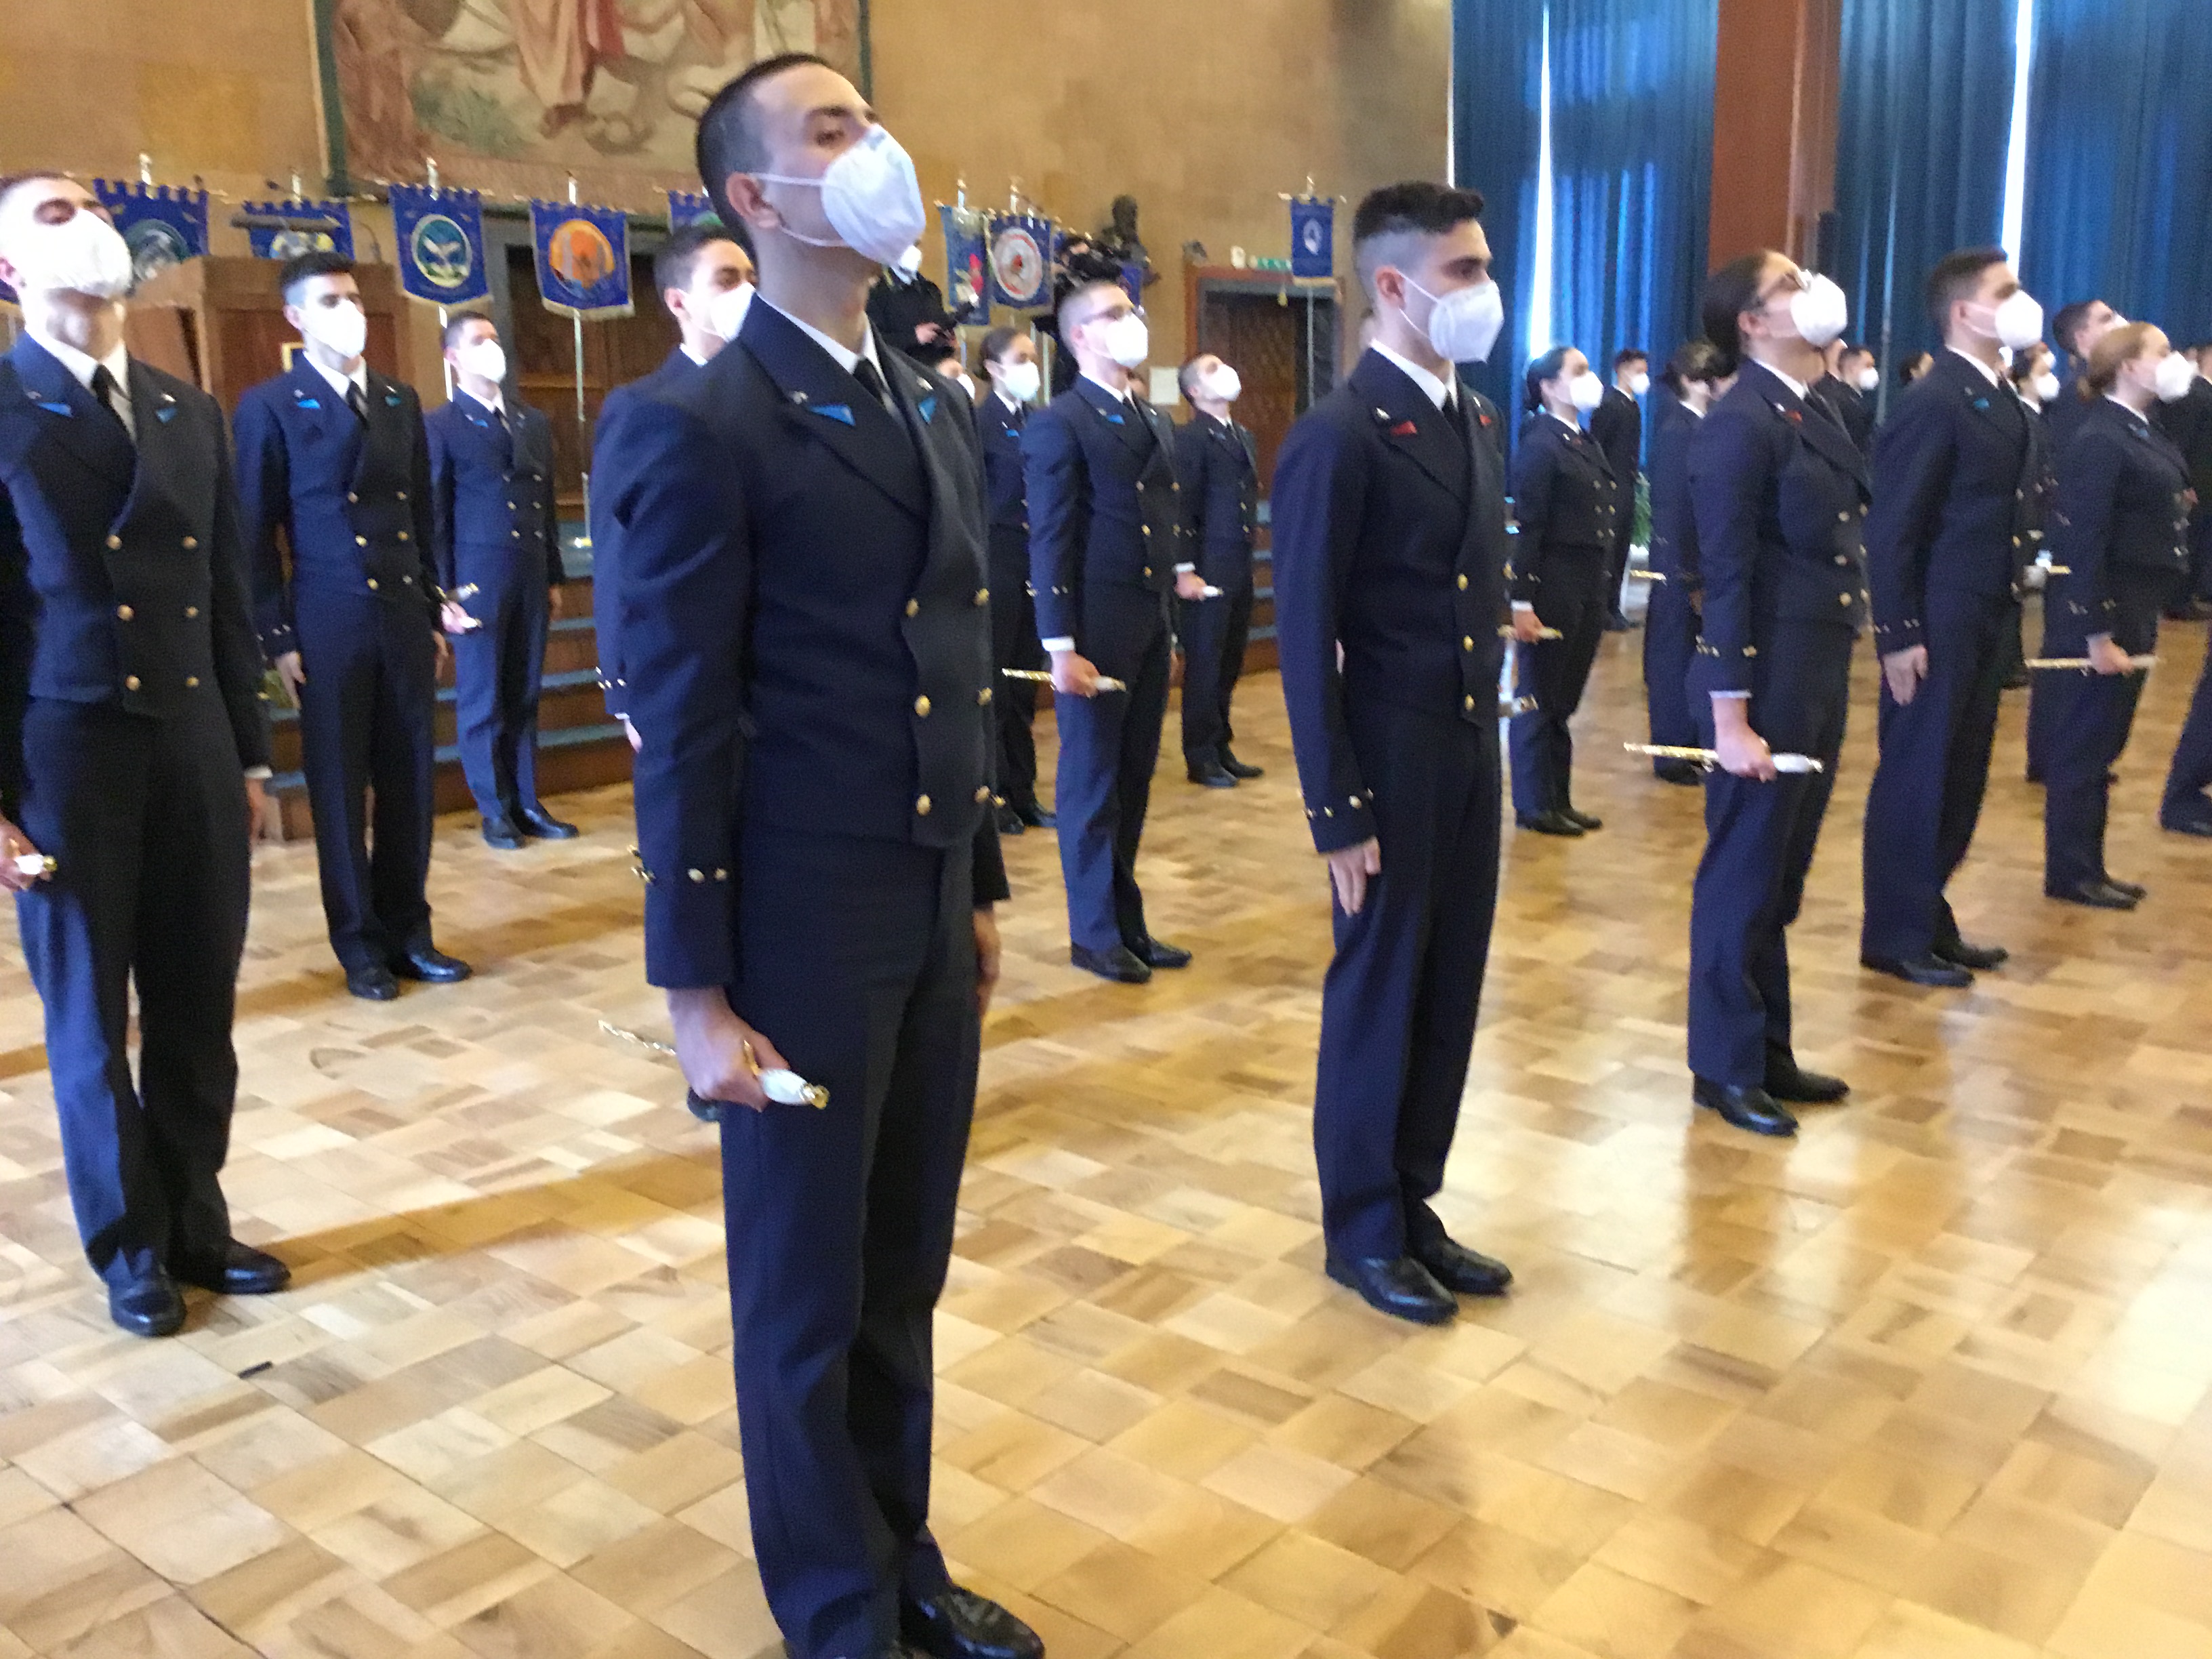 Cerimonia spadino Scuola Guerra Aerea Firenze feb 2021 (8)